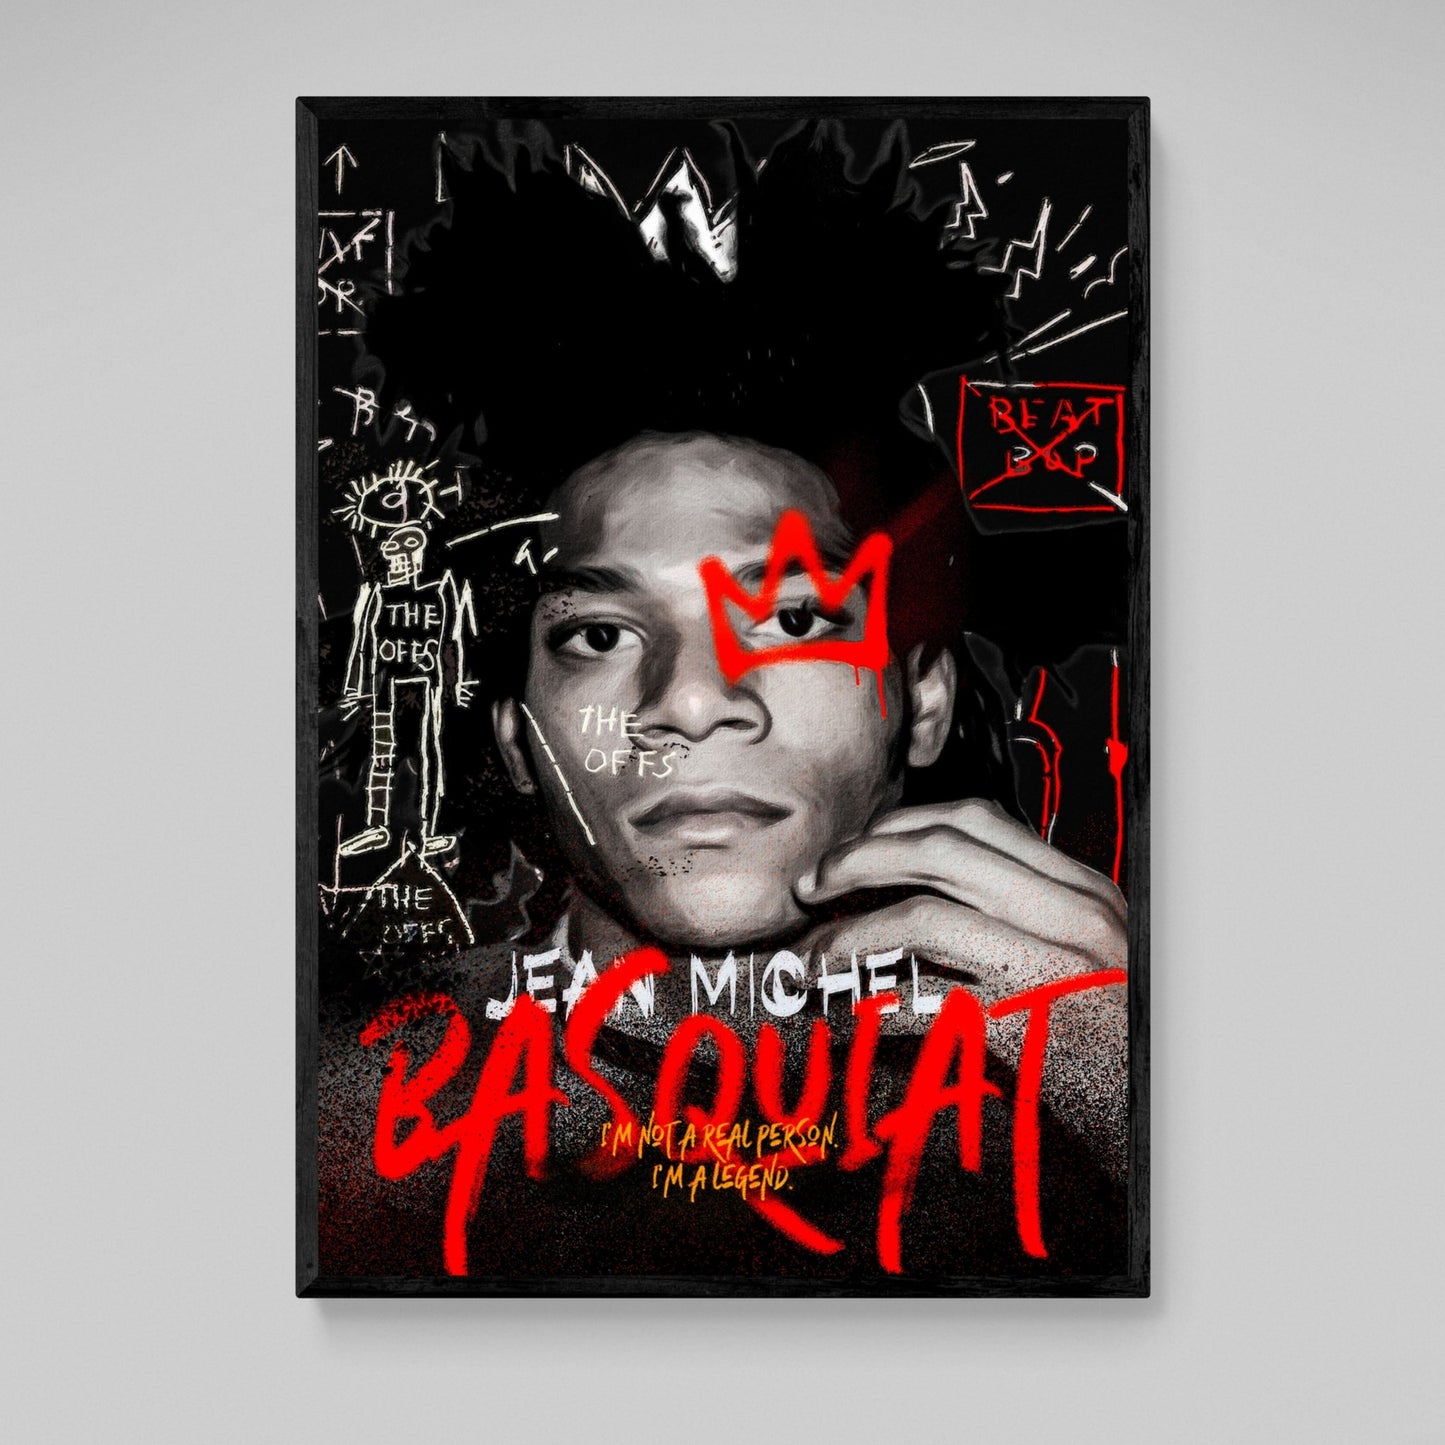 Jean Michel Basquiat Self Portrait - Luxury Art Canvas